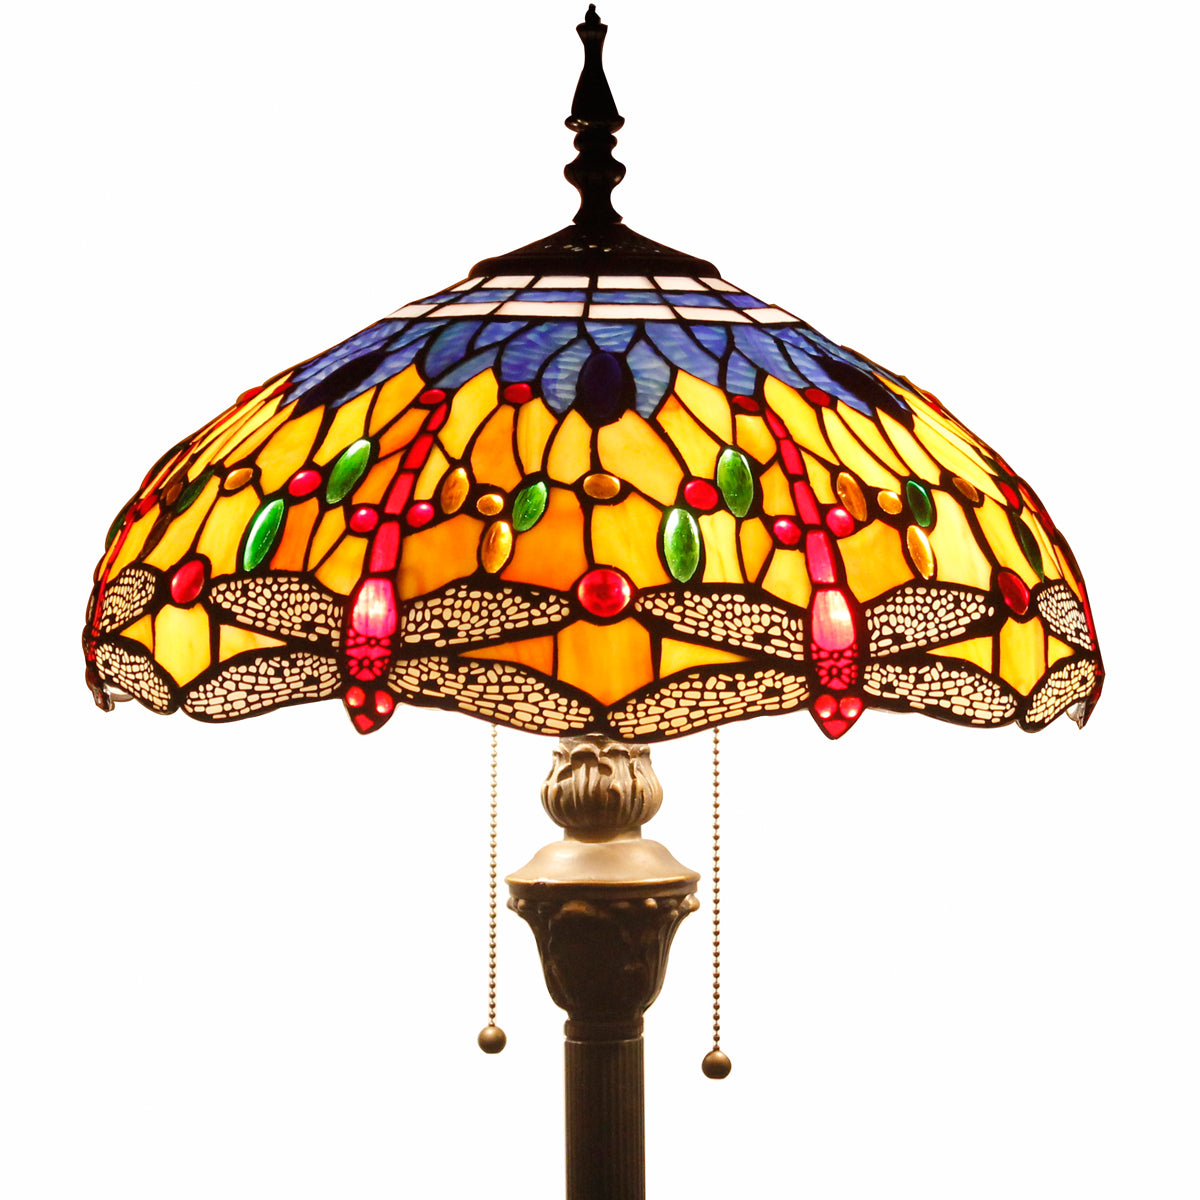 Werfactory® Tiffany Floor Lamp 16 Inch